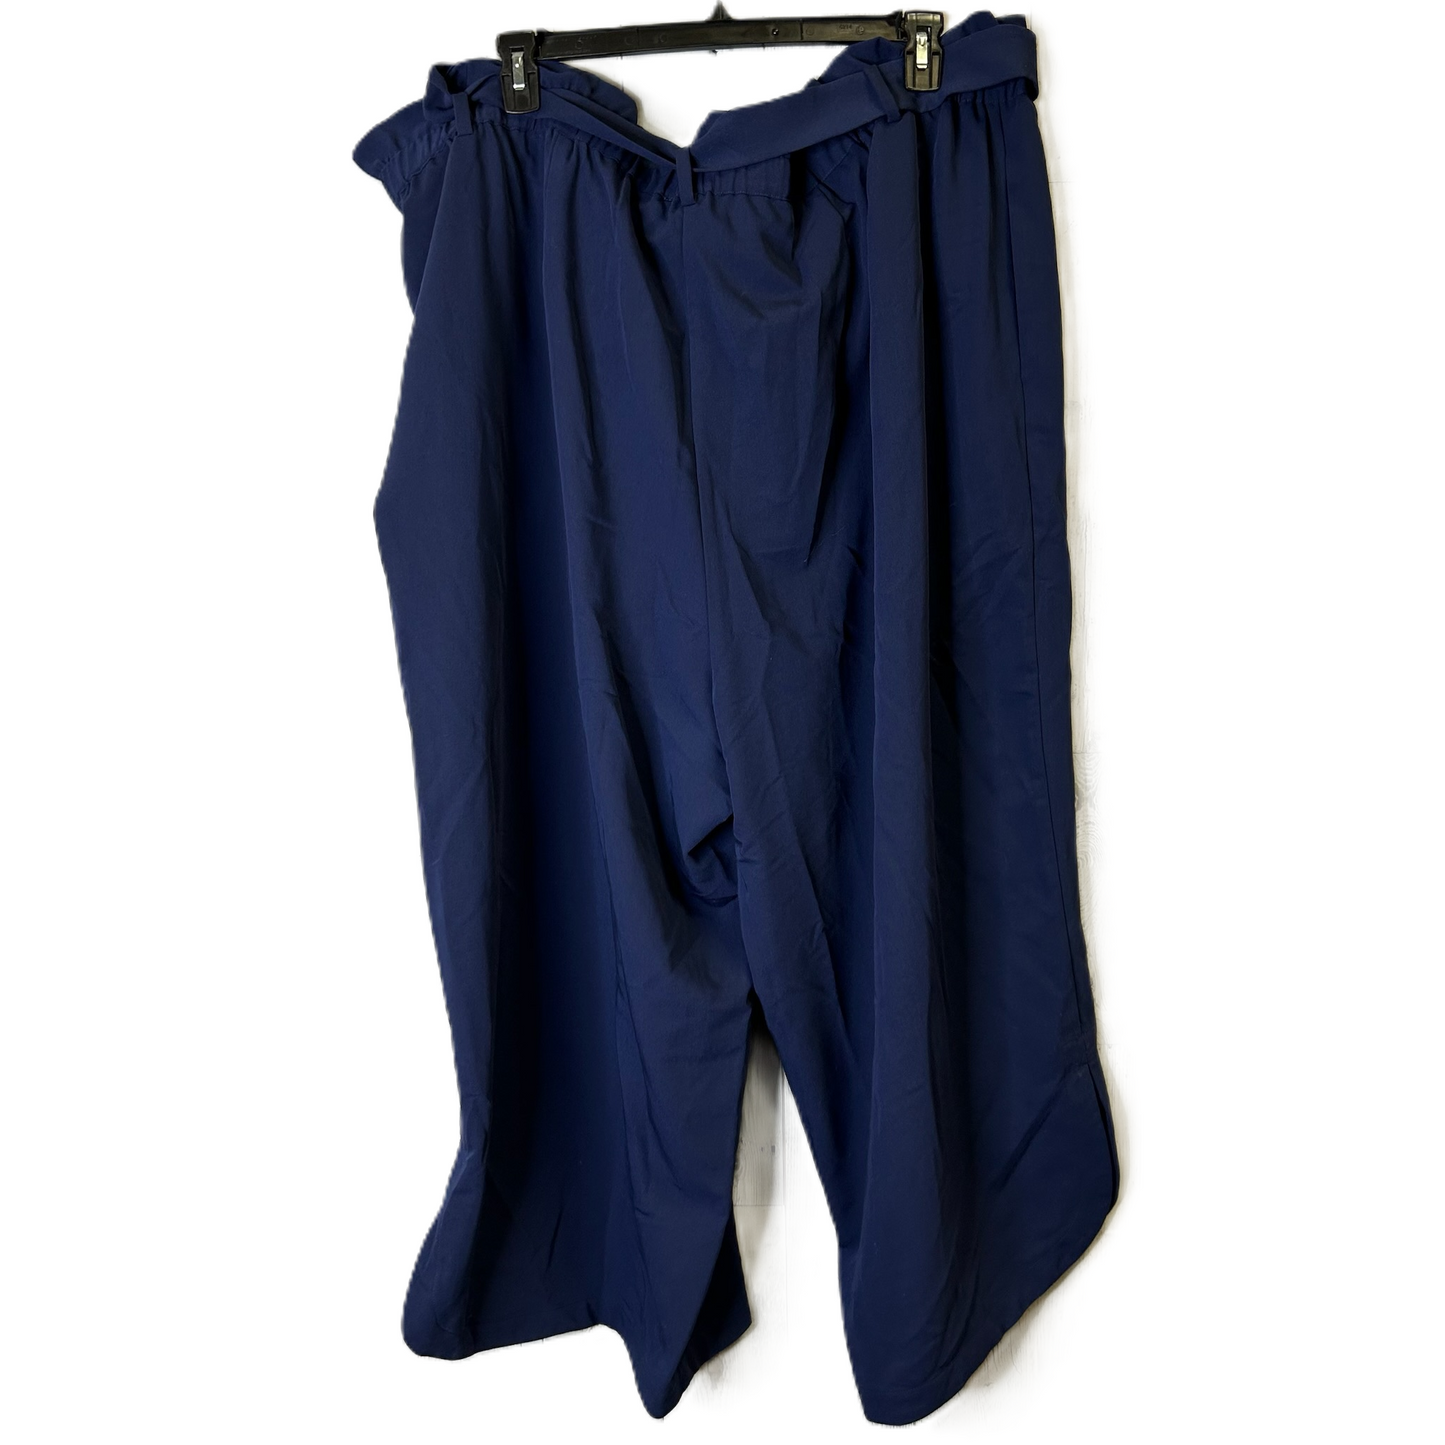 Blue Pants Dress By Eloquii, Size: 4x